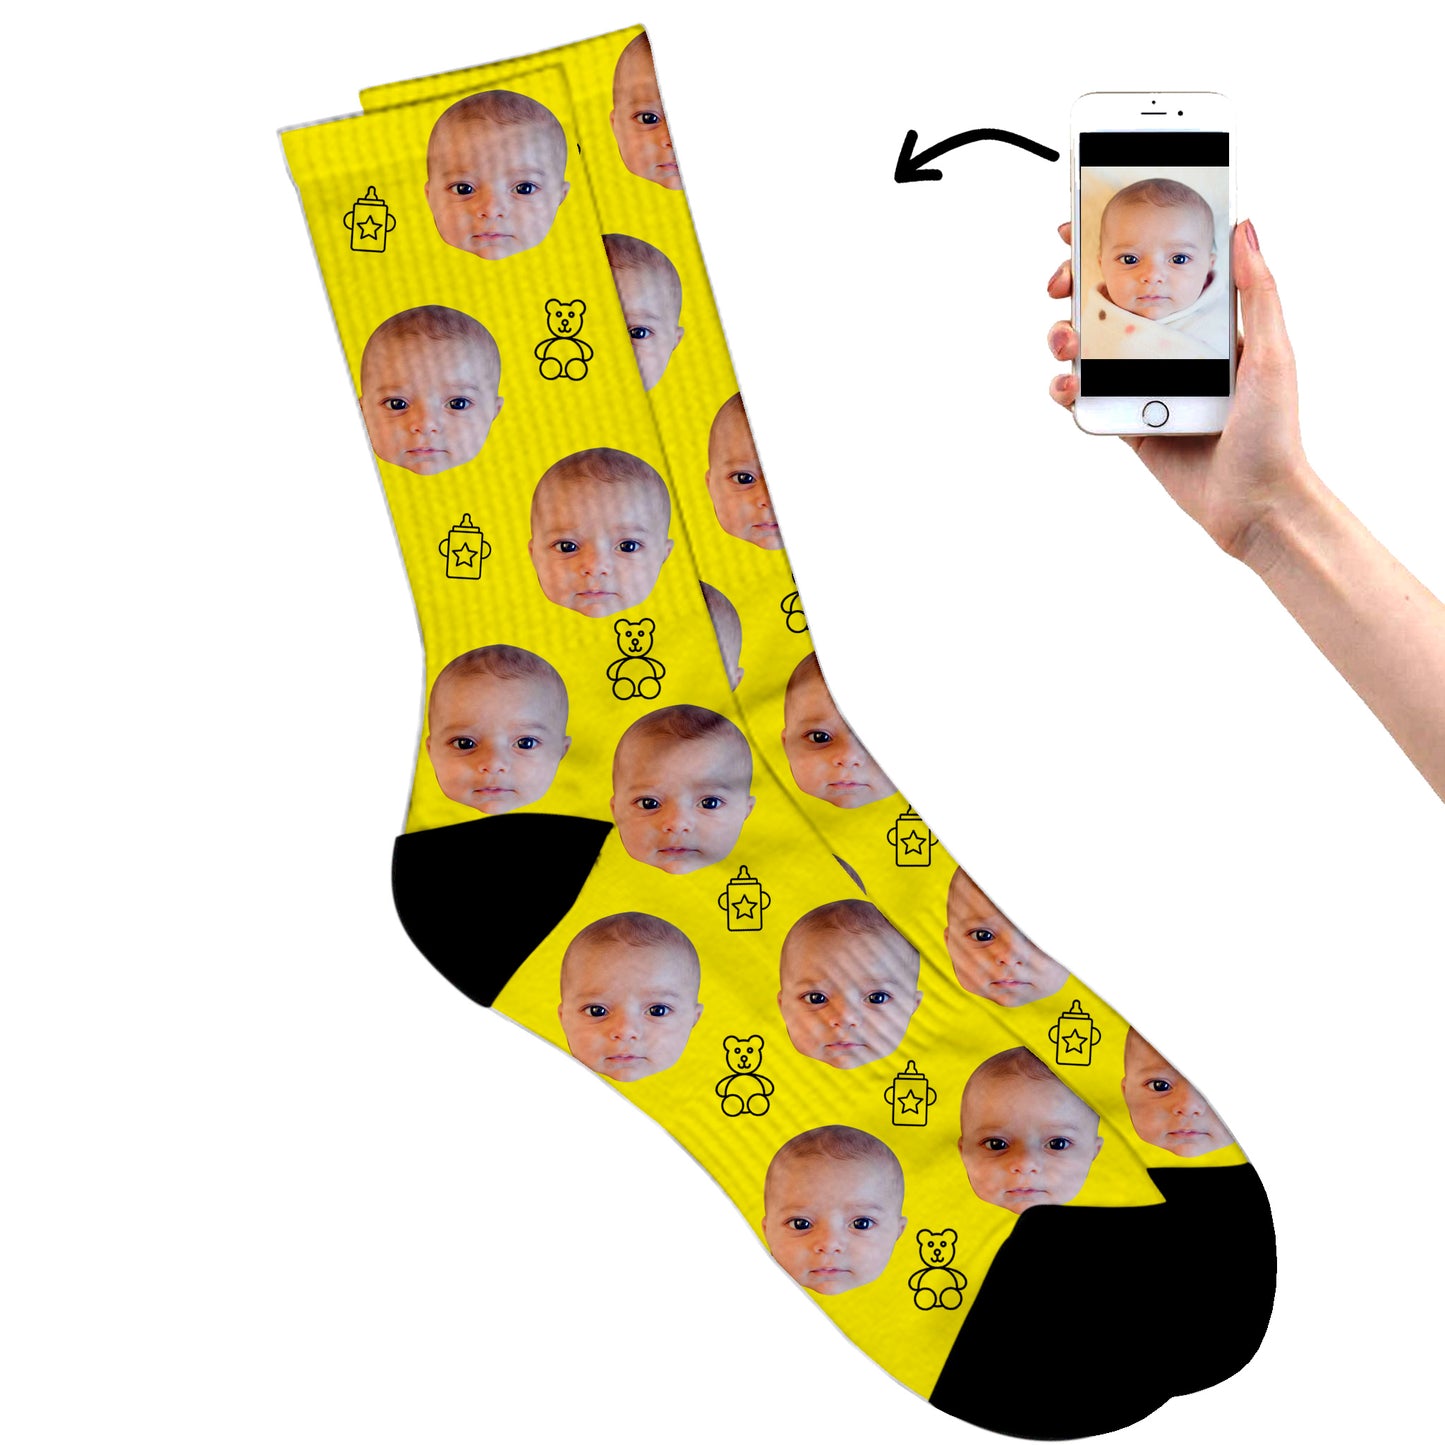 
                  
                    Baby On Socks
                  
                